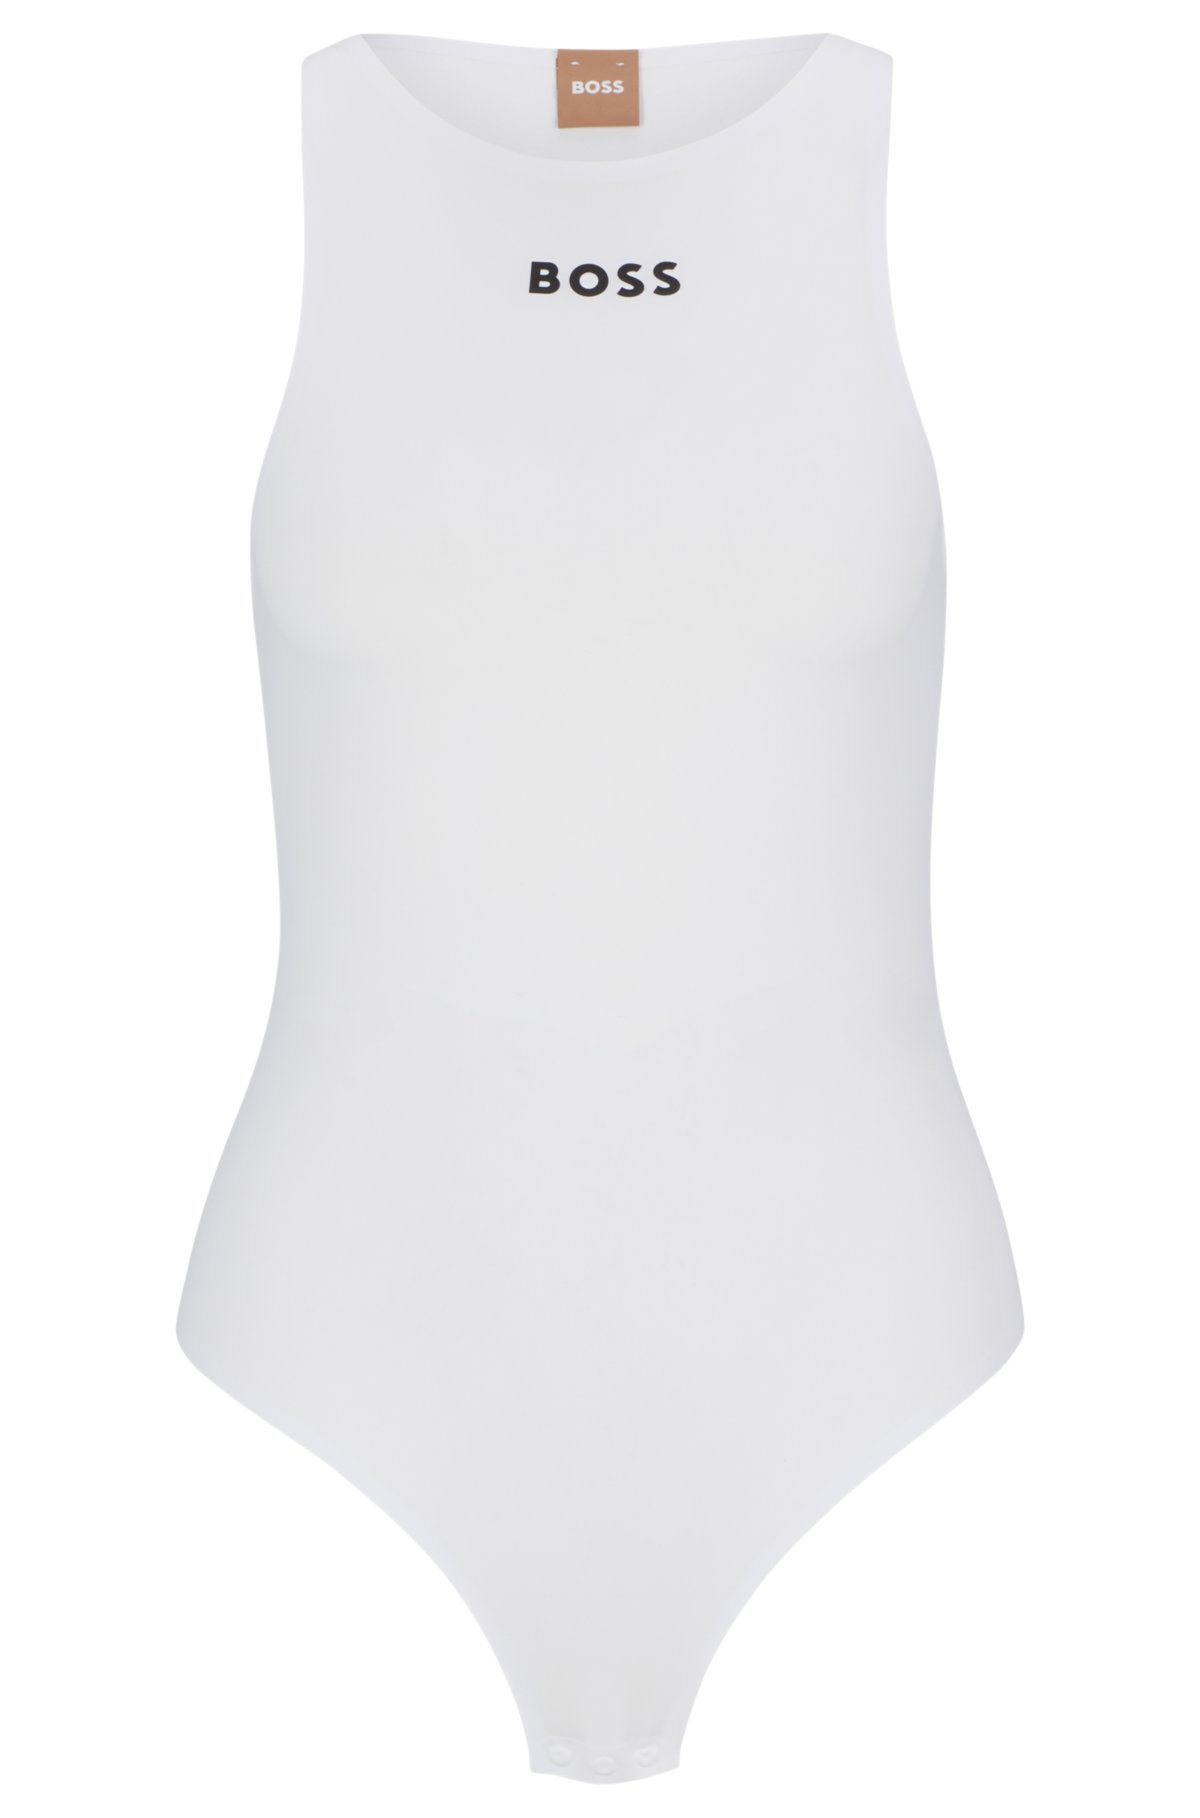 Sleeveless bodysuit with contrast logo